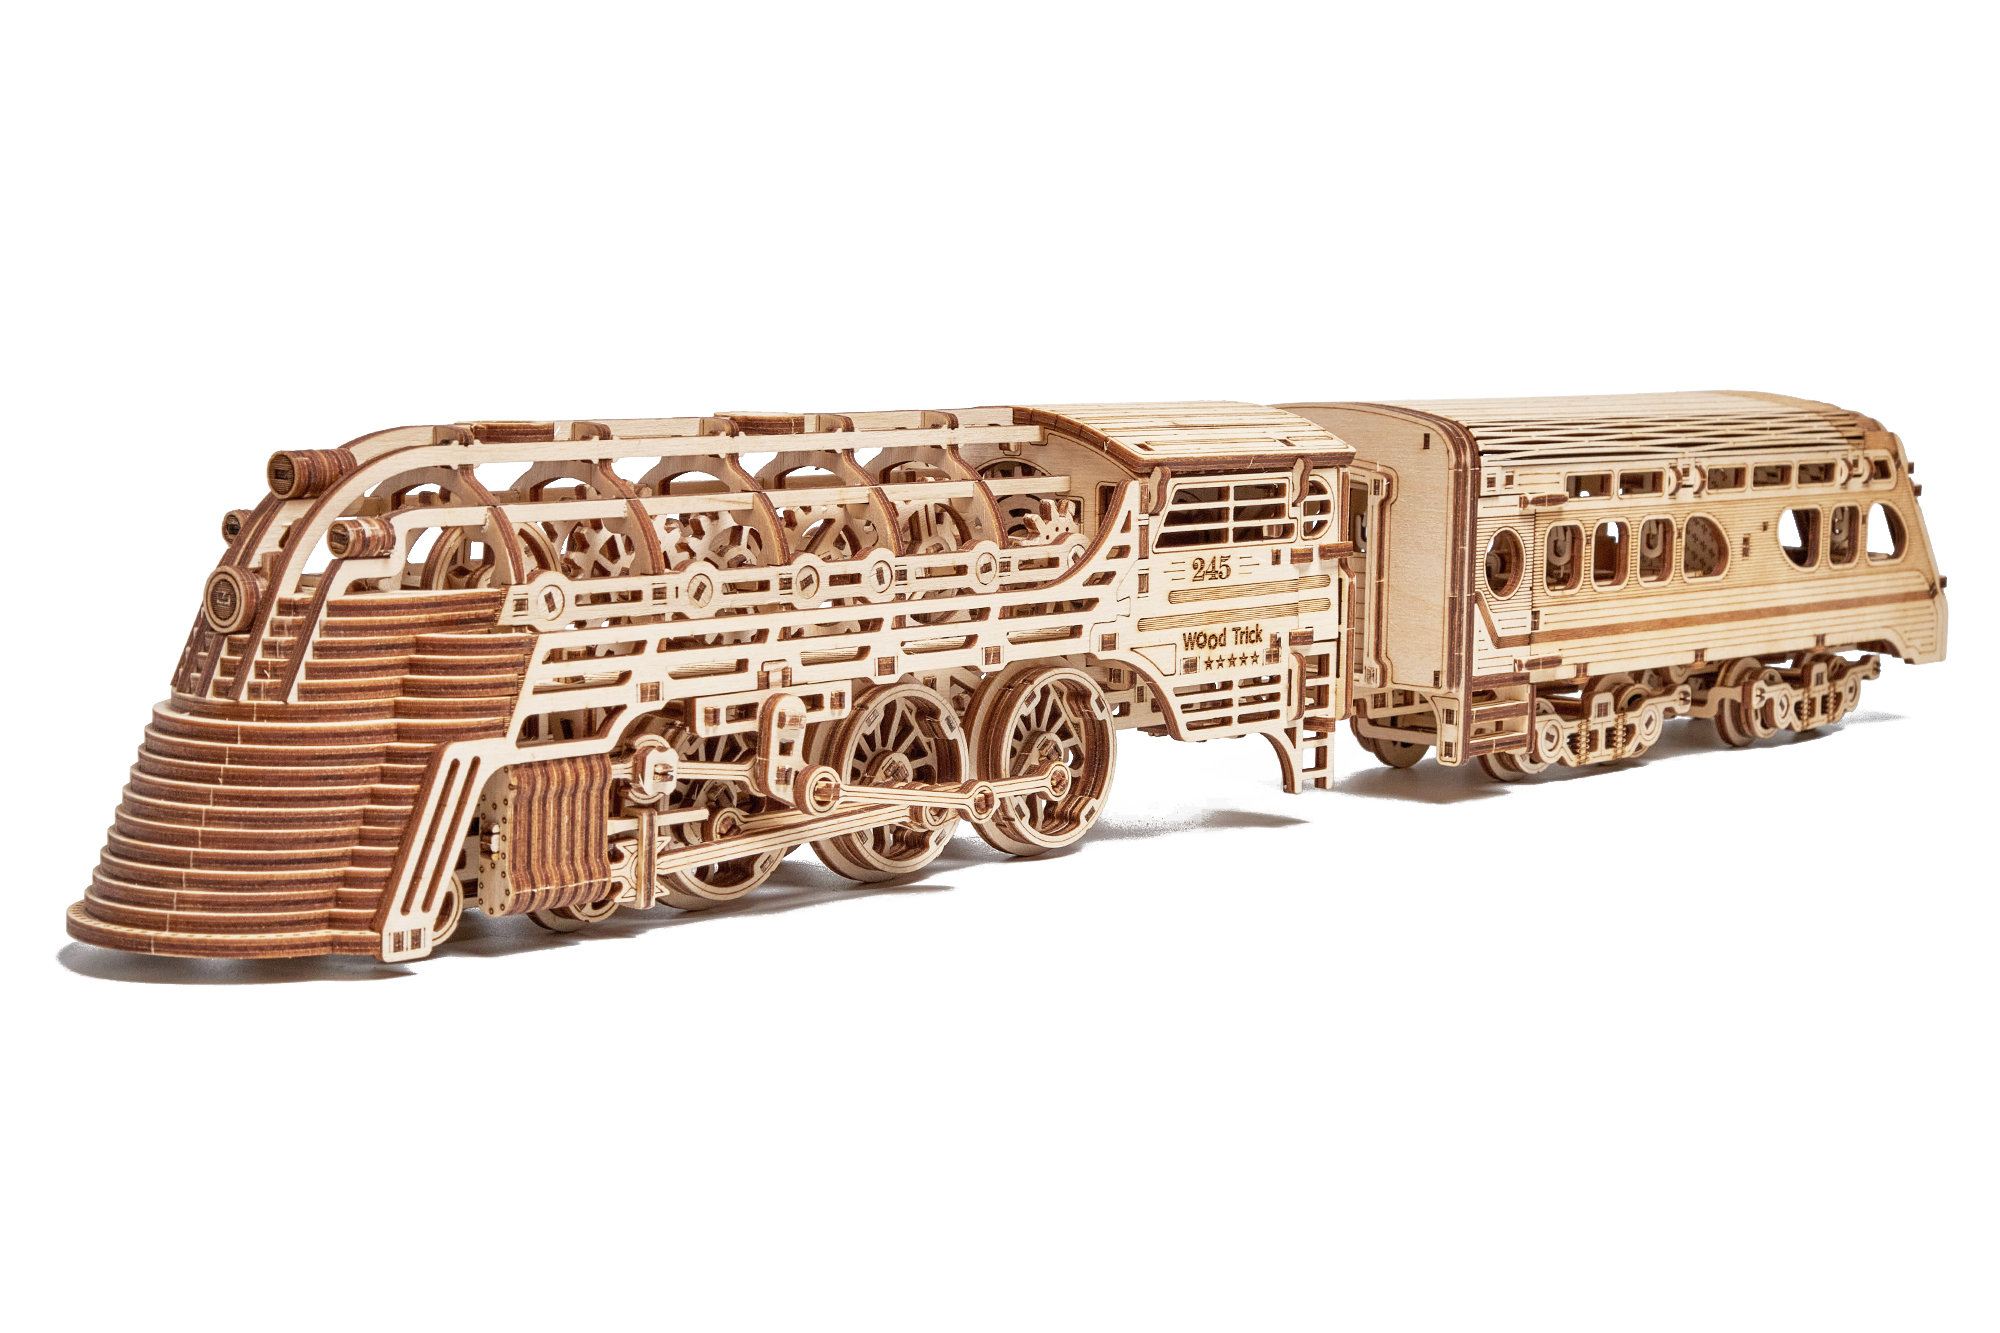 Wood Trick Atlantic Express Wooden 3D Mechanical Model Kit Puzzle